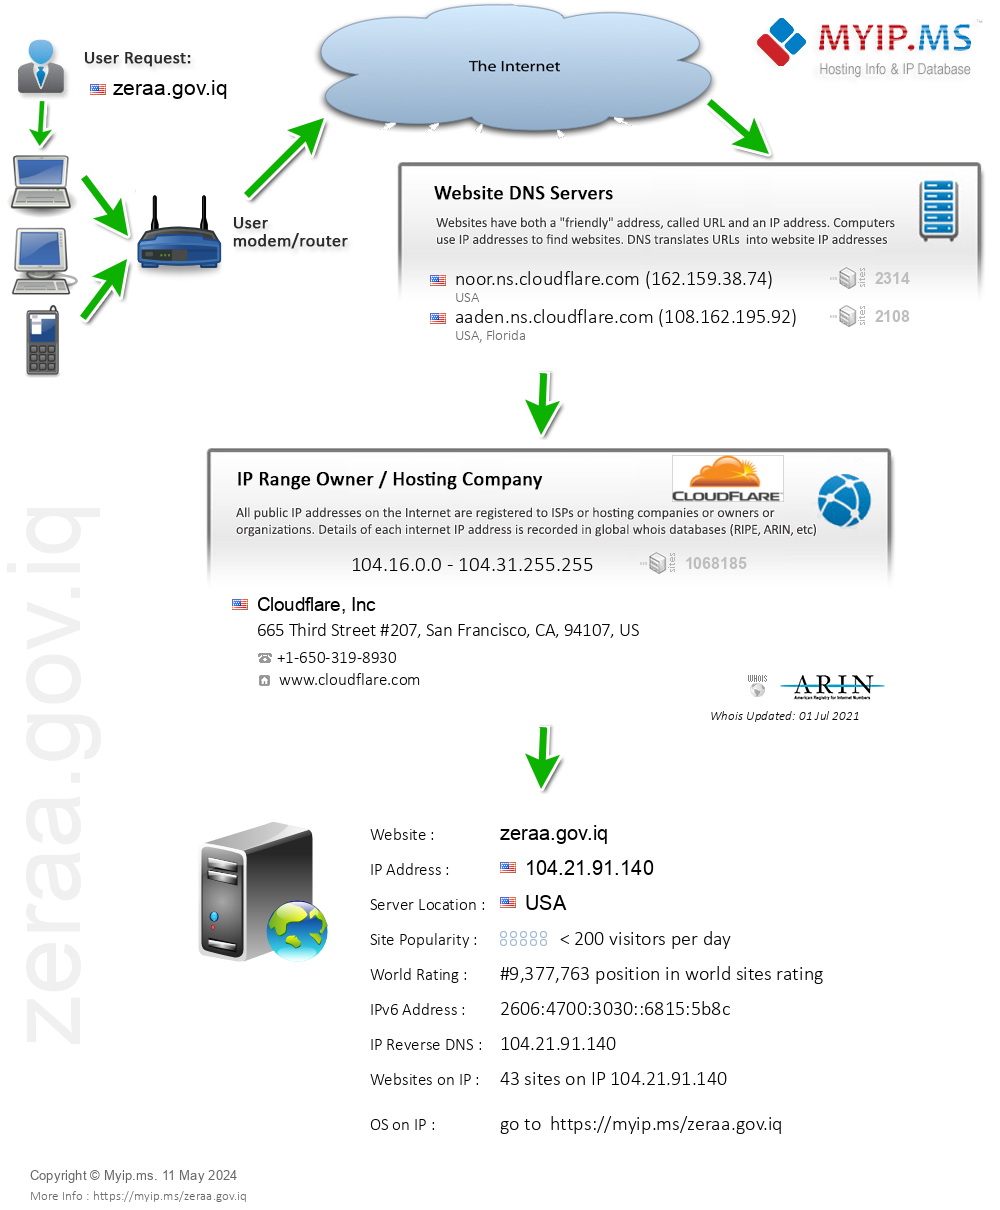 Zeraa.gov.iq - Website Hosting Visual IP Diagram